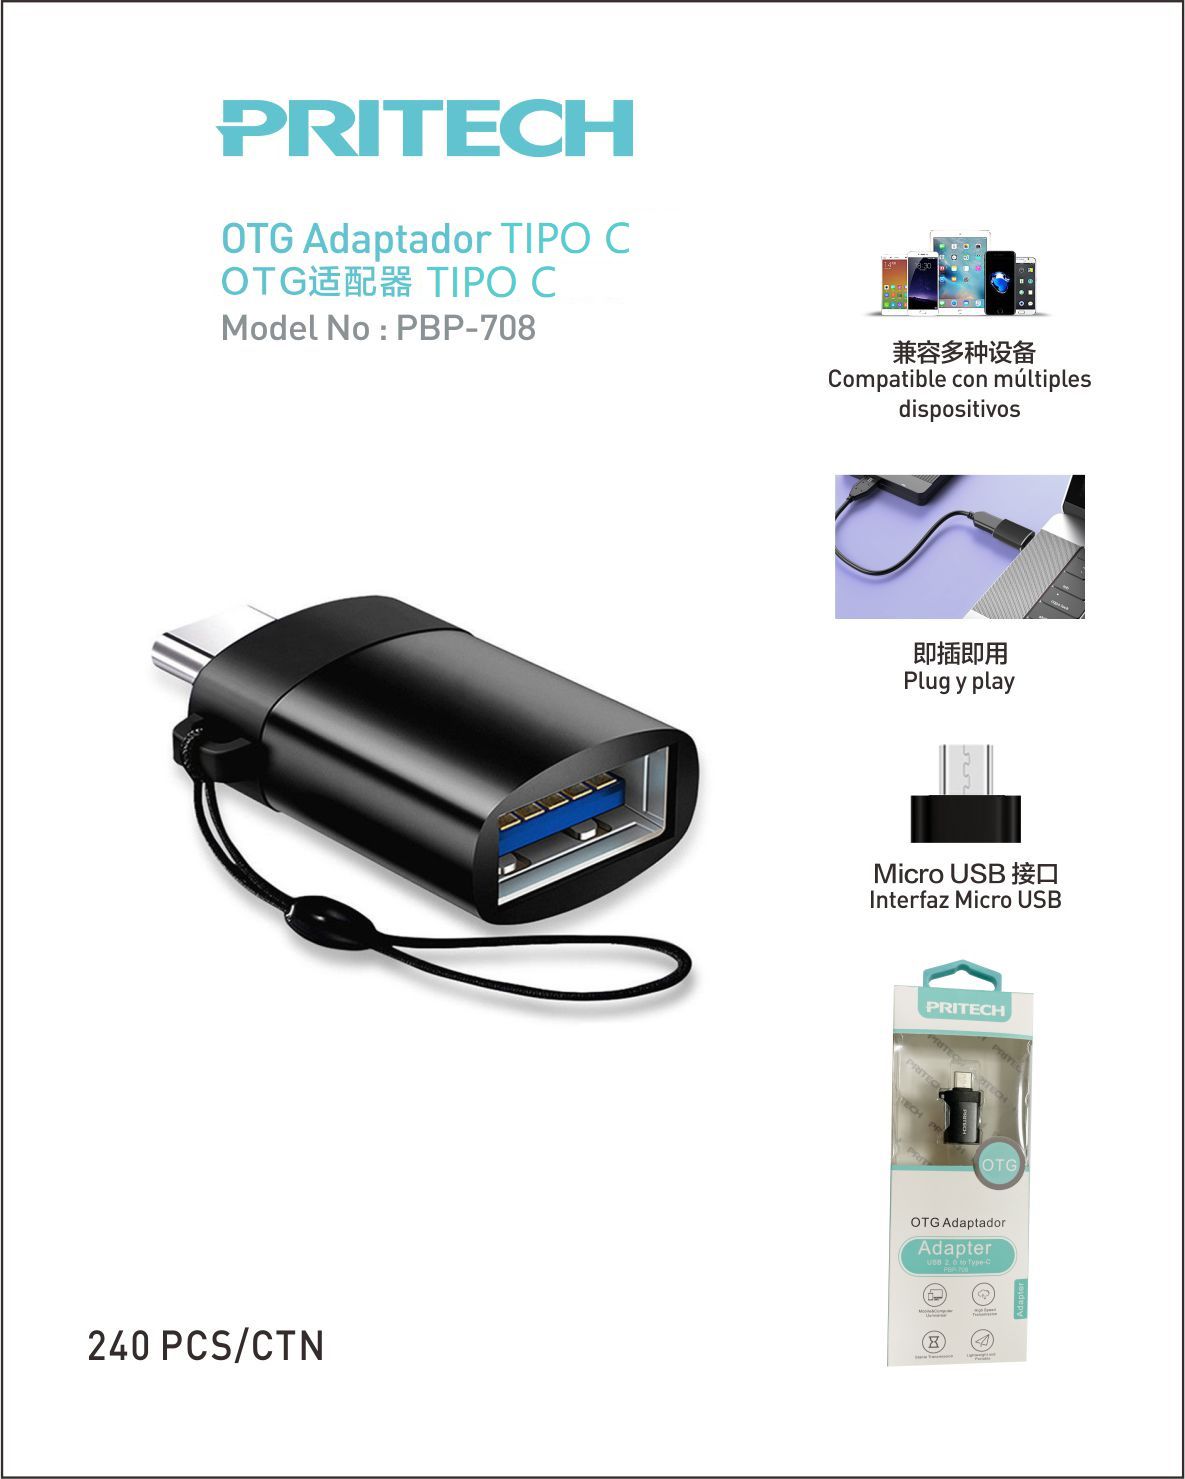 PRITECH ADAPTADOR USB TIPO C PBP-708